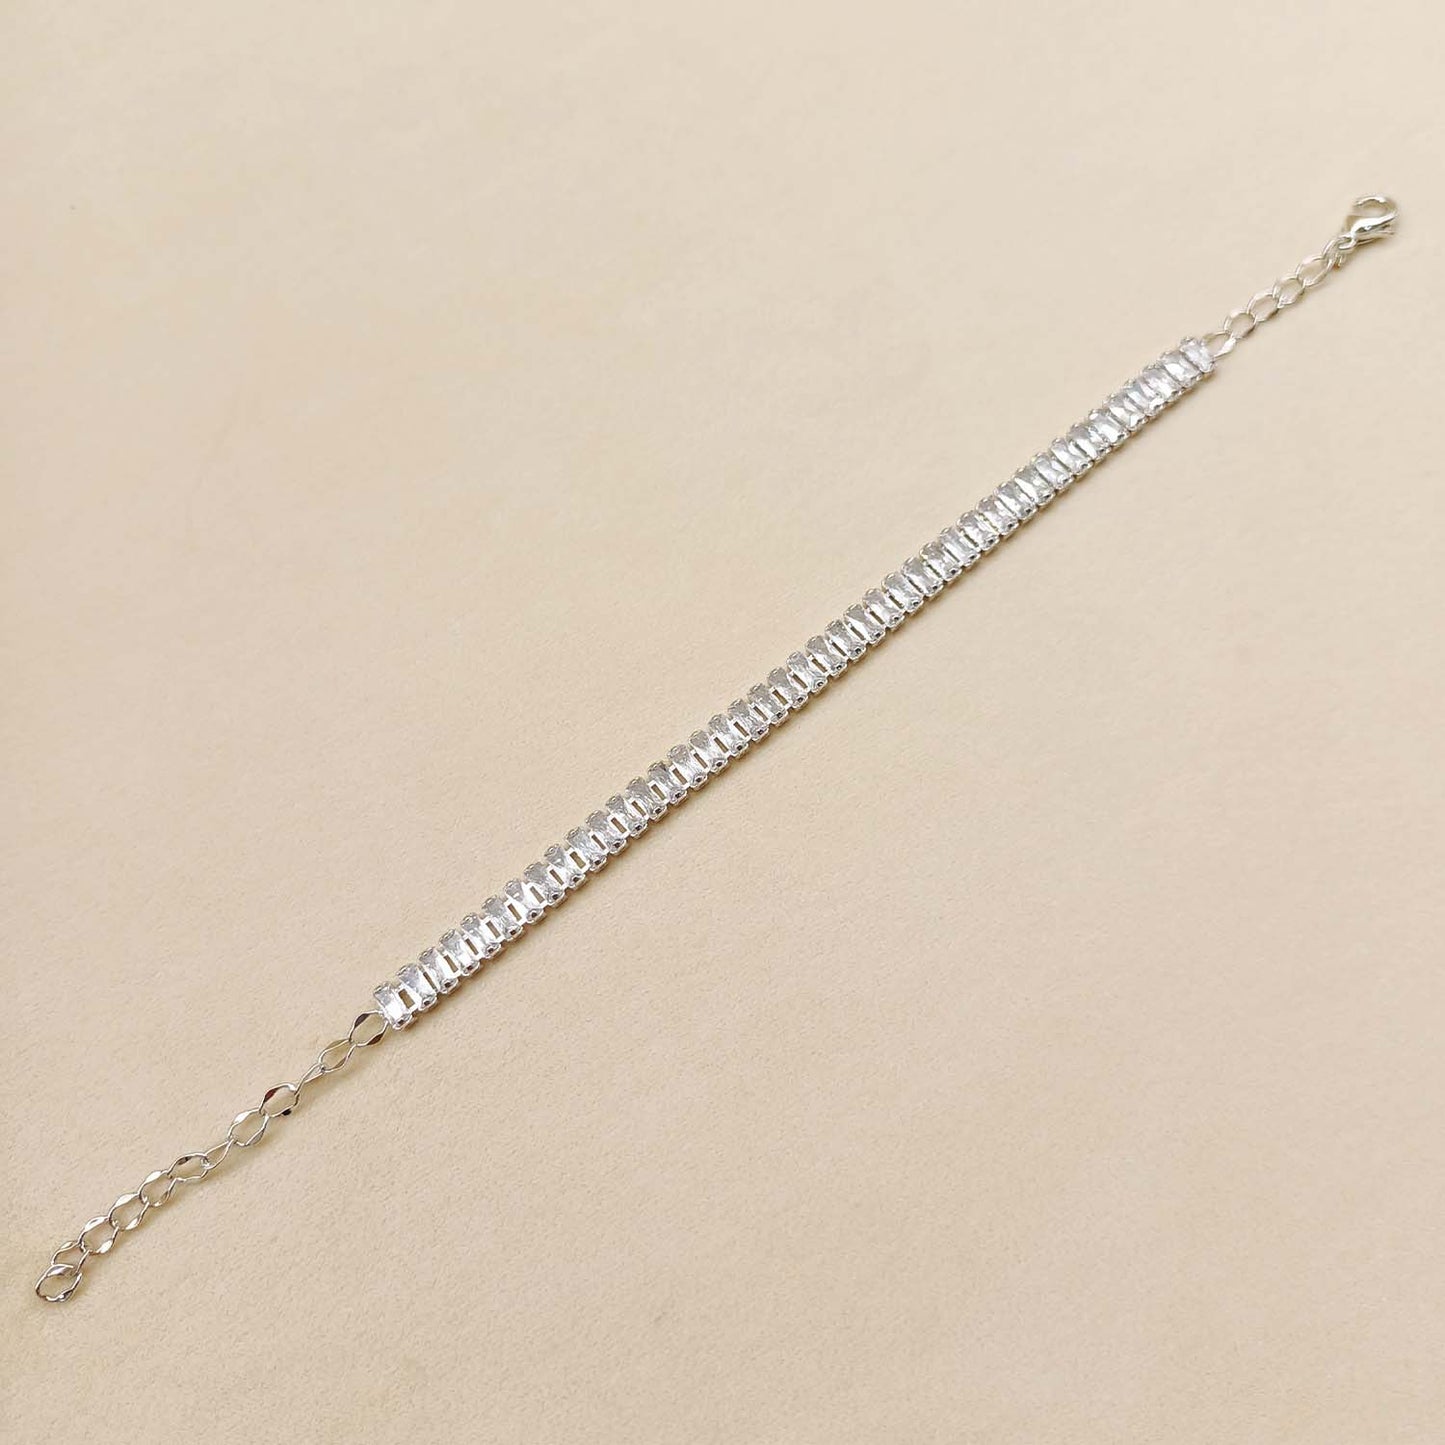 Taruni American Diamonds Silver Plated Flexible Bracelet